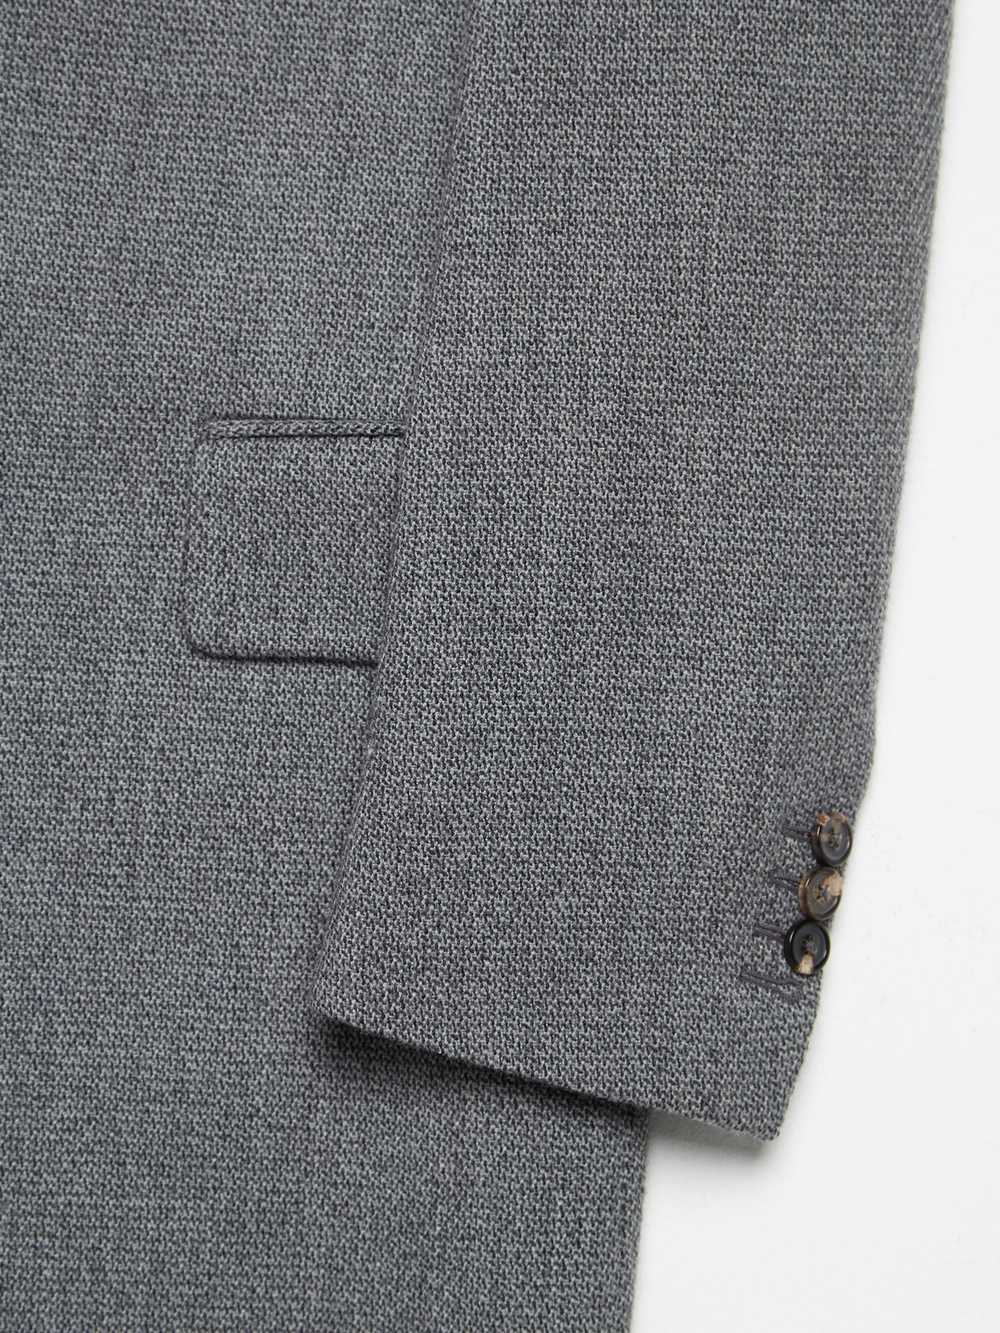 Maison Margiela Gray Wool Square Shoulders Coat - image 5